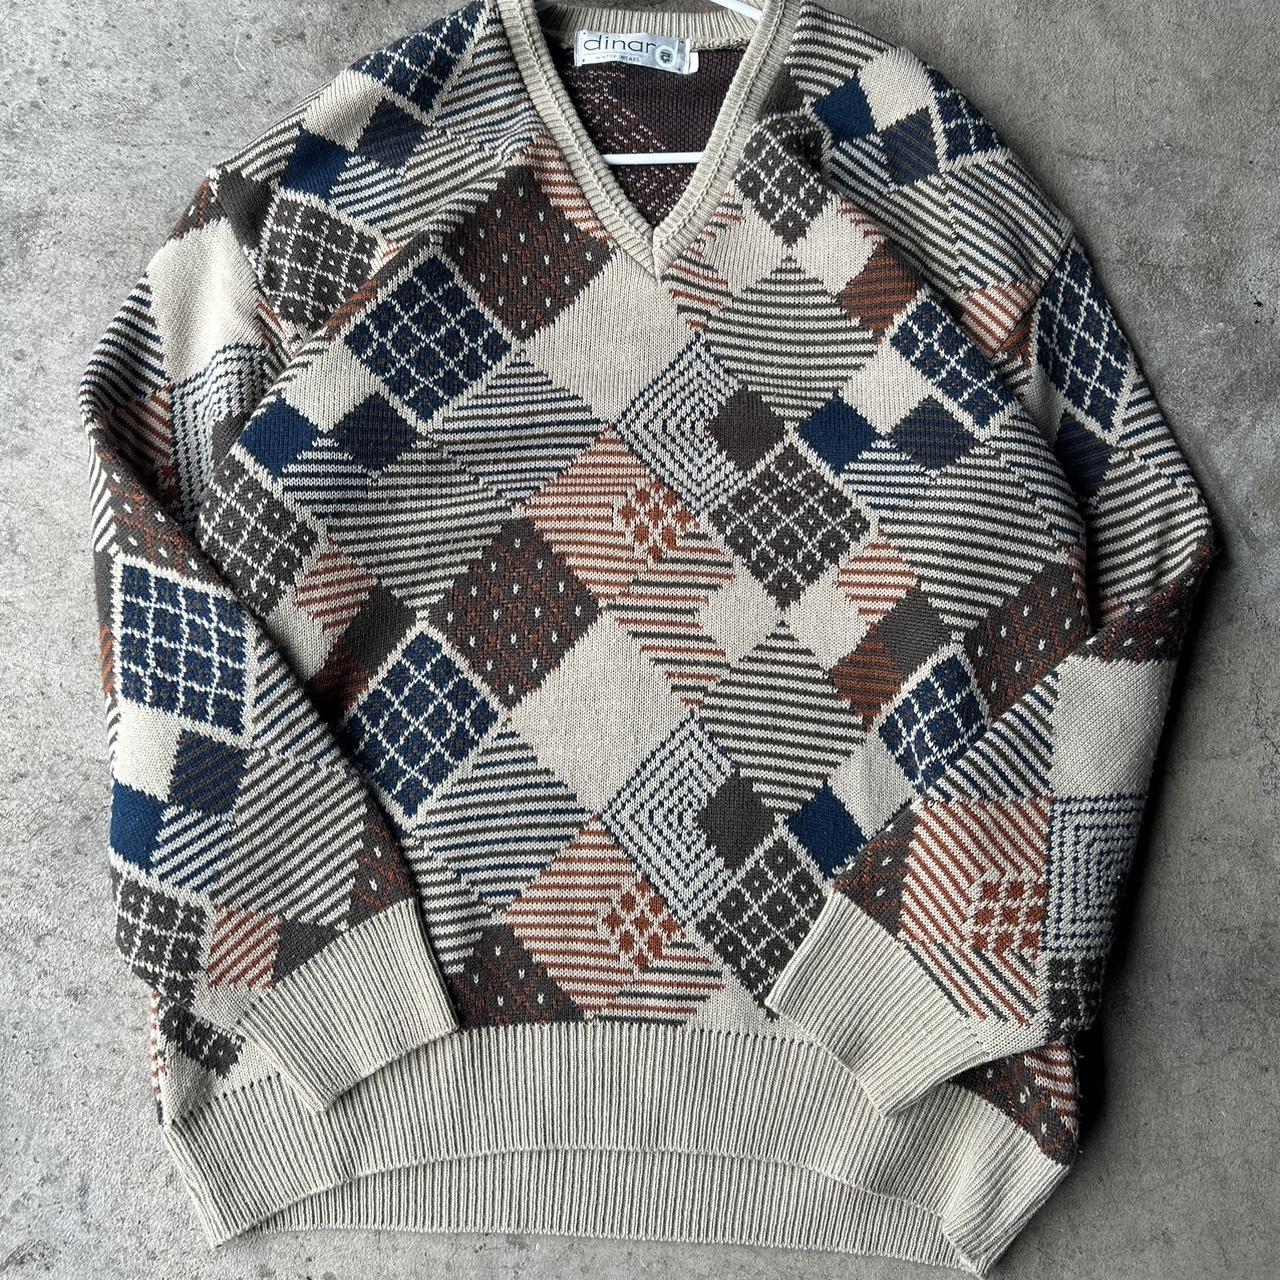 Vintage Dinar Square Pattern Sweater Size L/XL - Depop